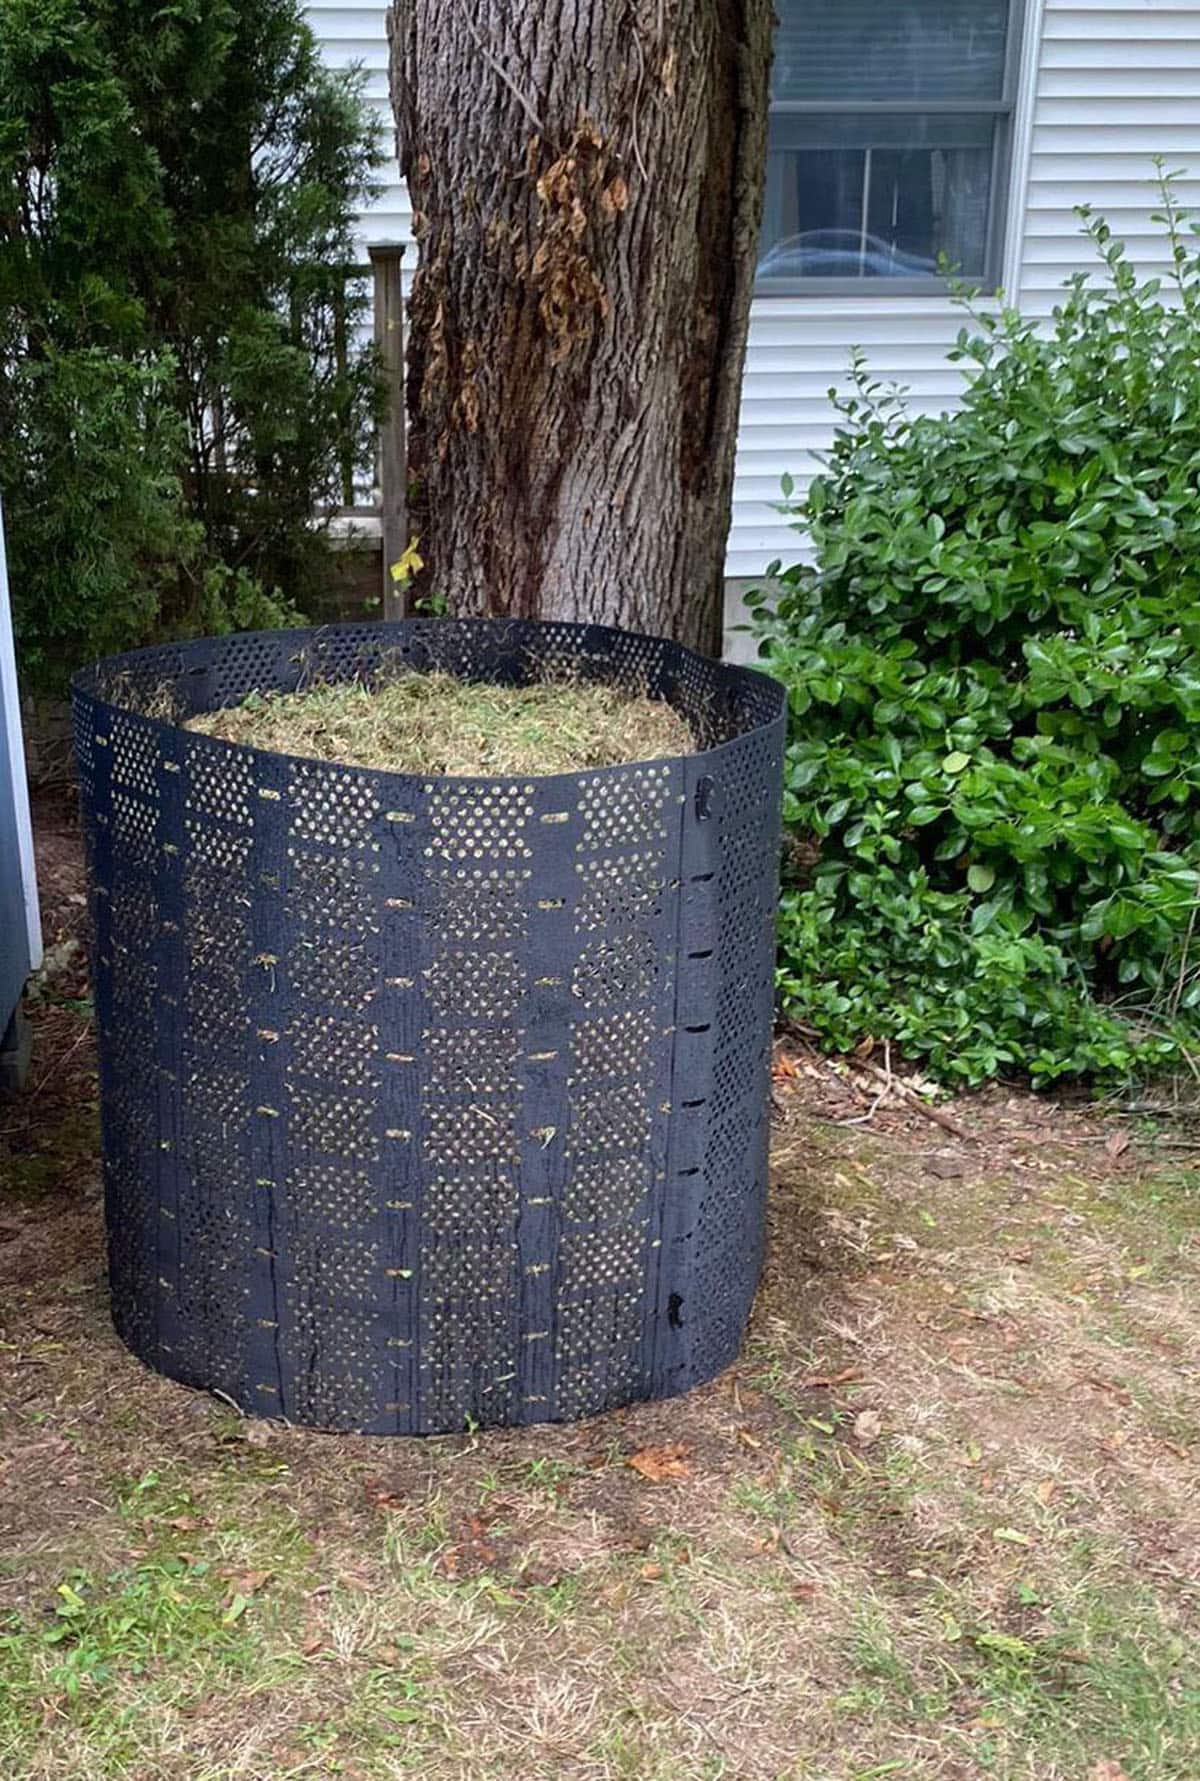 https://www.apieceofrainbow.com/wp-content/uploads/2023/01/DIY-compost-bins-ideas-tumbler-wire-mesh-hardware-cloth-gardening-composting-systems-vermicompost-tea-worm-bin-tower-apieceofrainbow-8.jpg